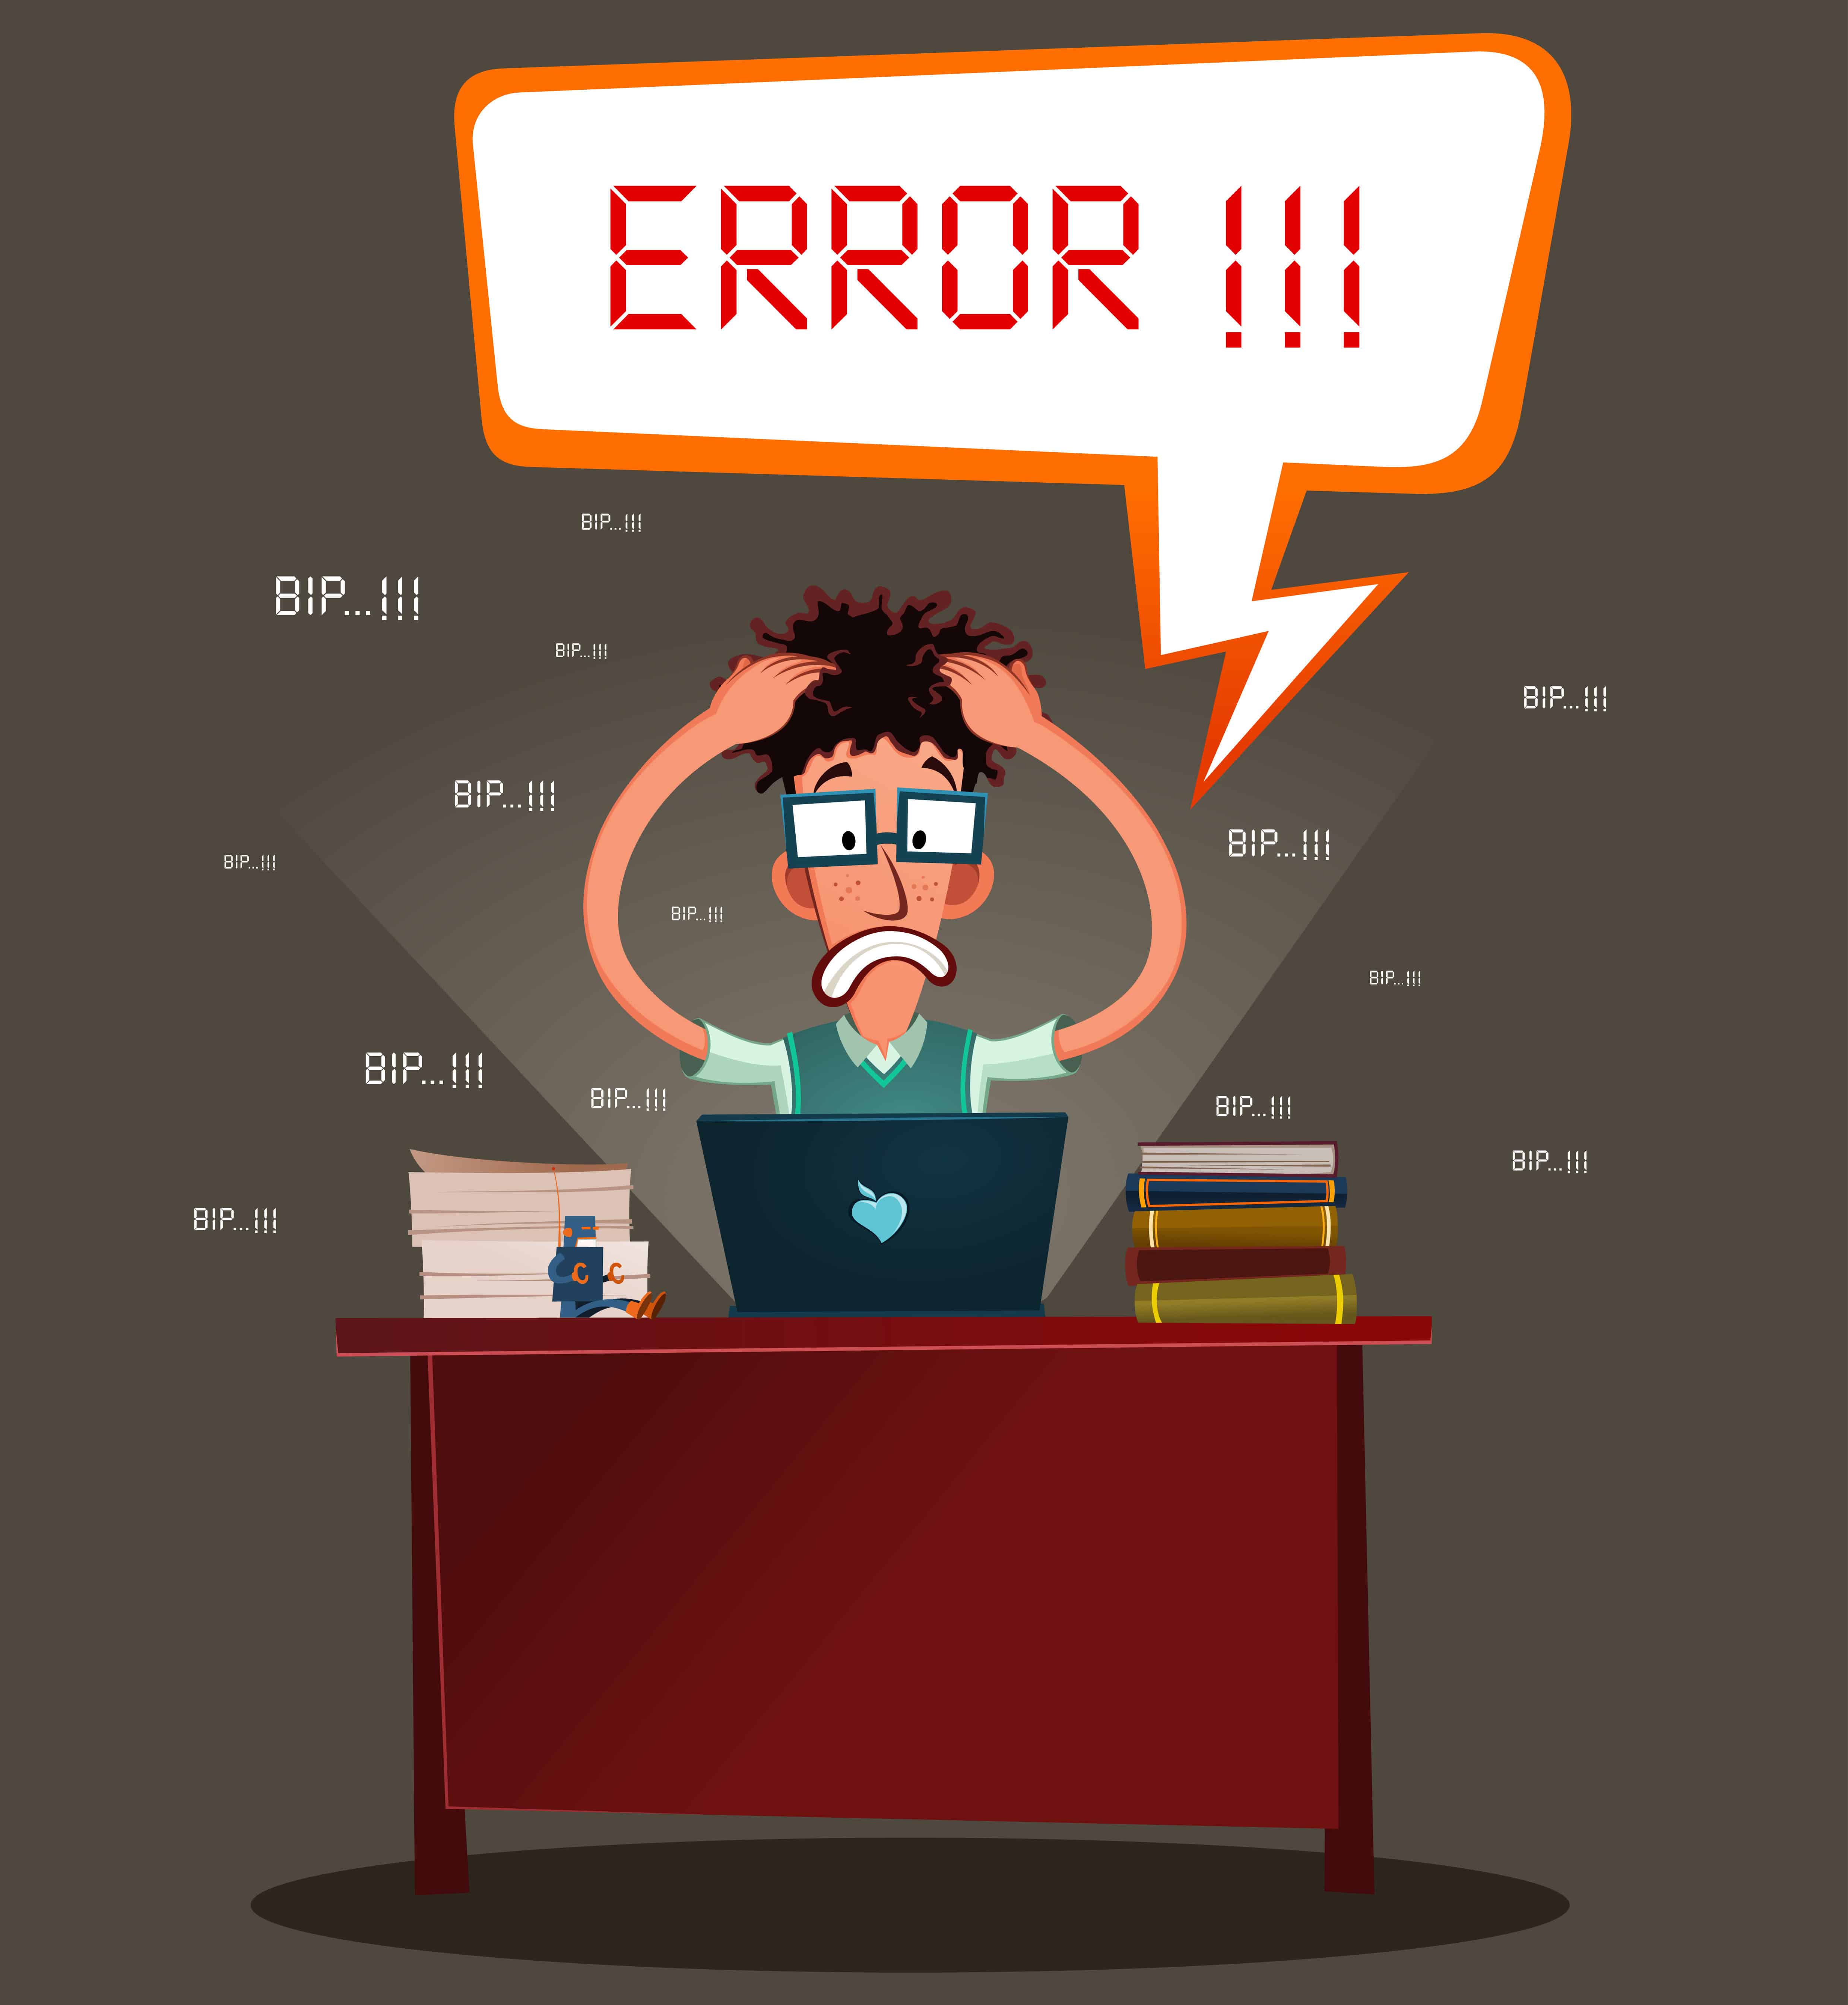 A computer beeping as it experiences an error